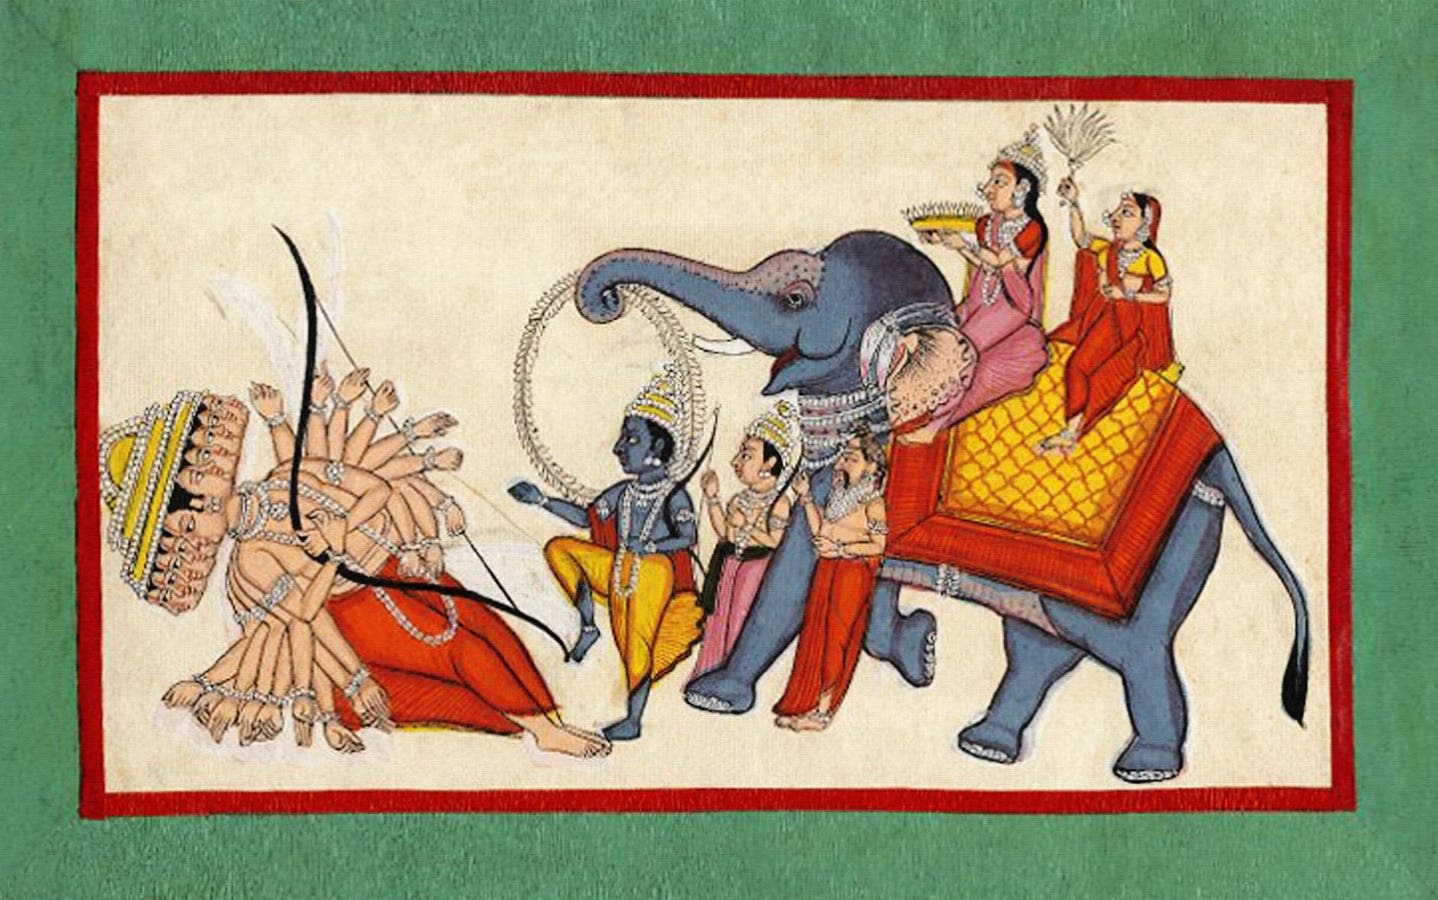 Film Industry Titan Brings Hindu Mythology To Hollywood